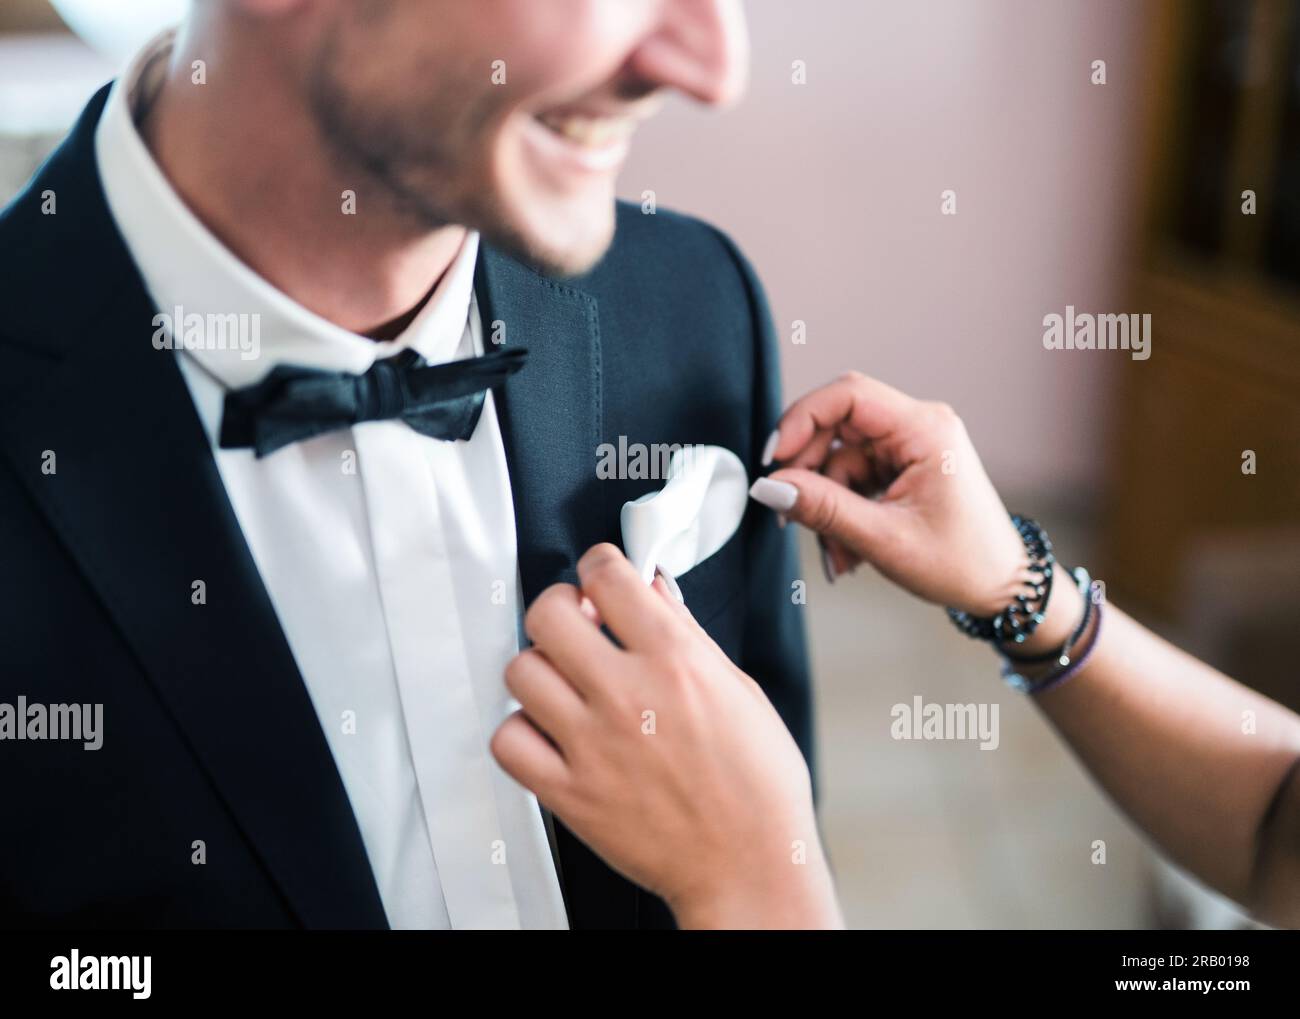 Der Bräutigam wird auf seine Hochzeit vorbereitet / lo sposo si sta preparando per il suo matrimonio Foto Stock